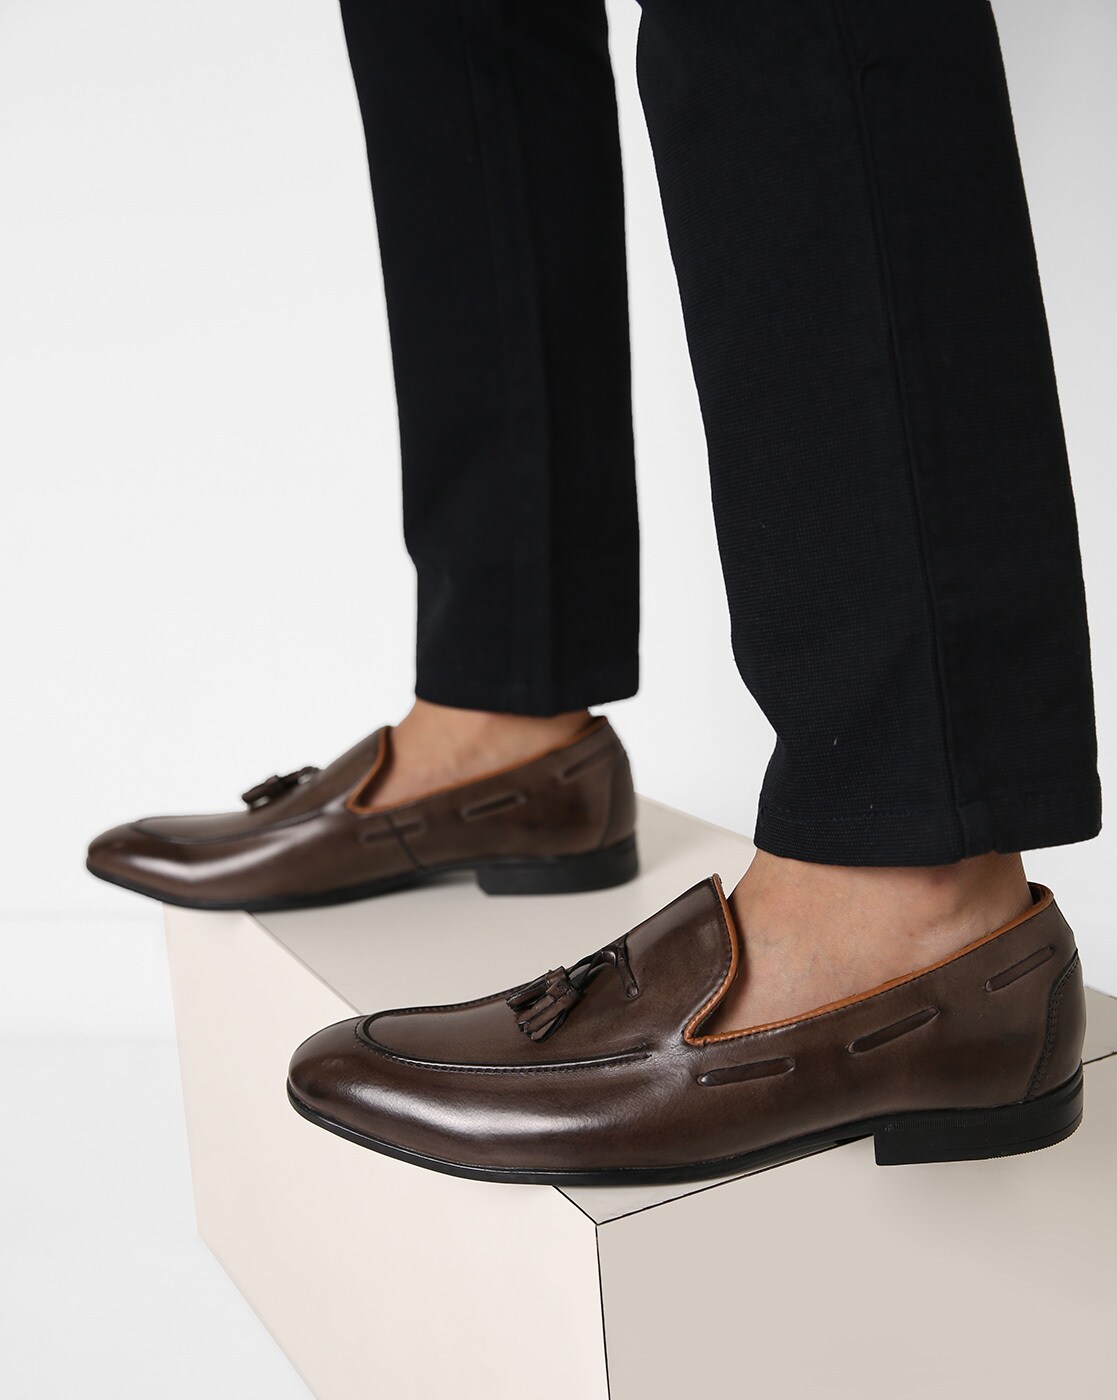 dark brown slip on shoes